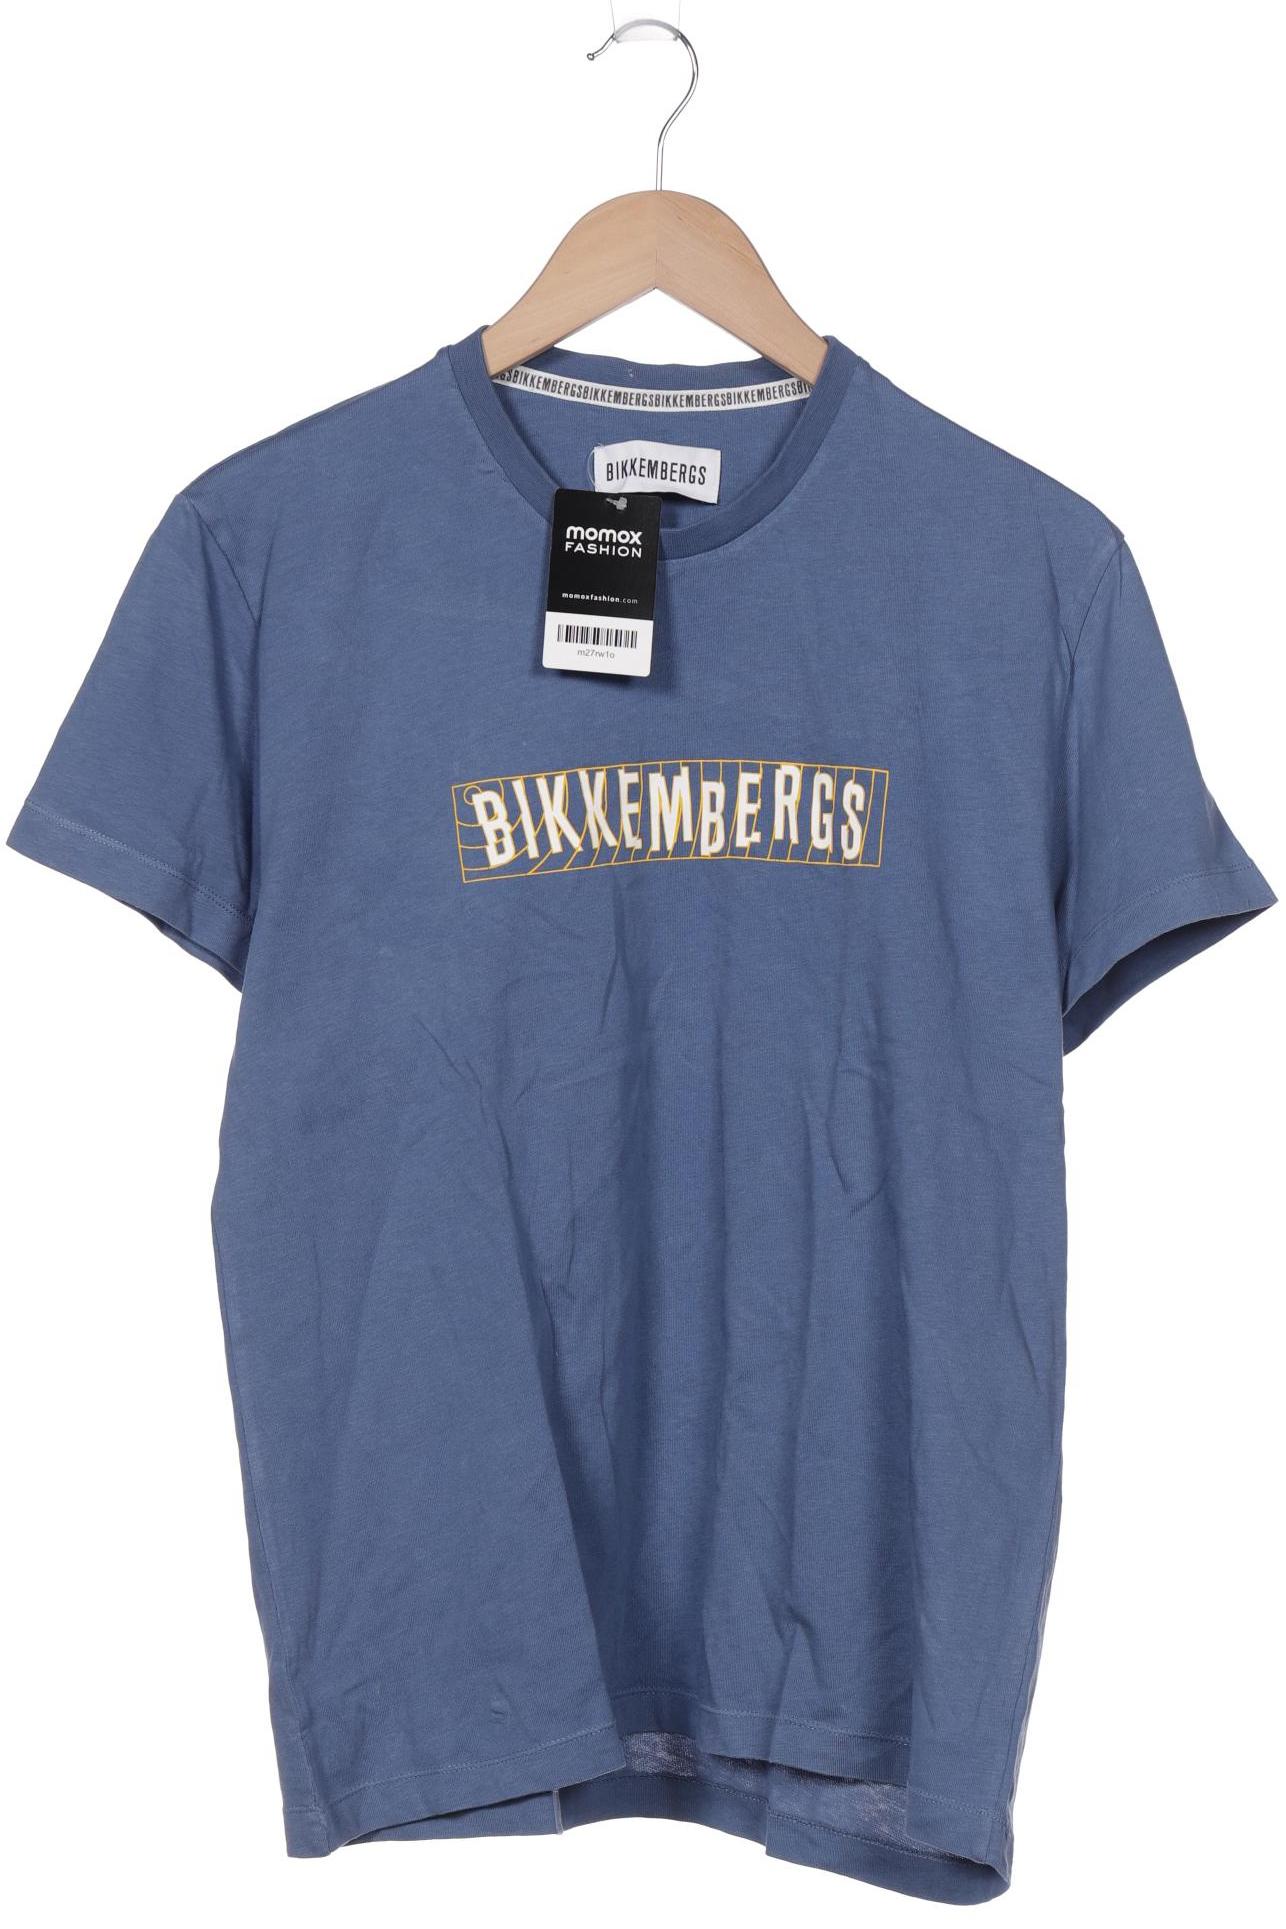 Bikkembergs Herren T-Shirt, blau, Gr. 54 von Bikkembergs